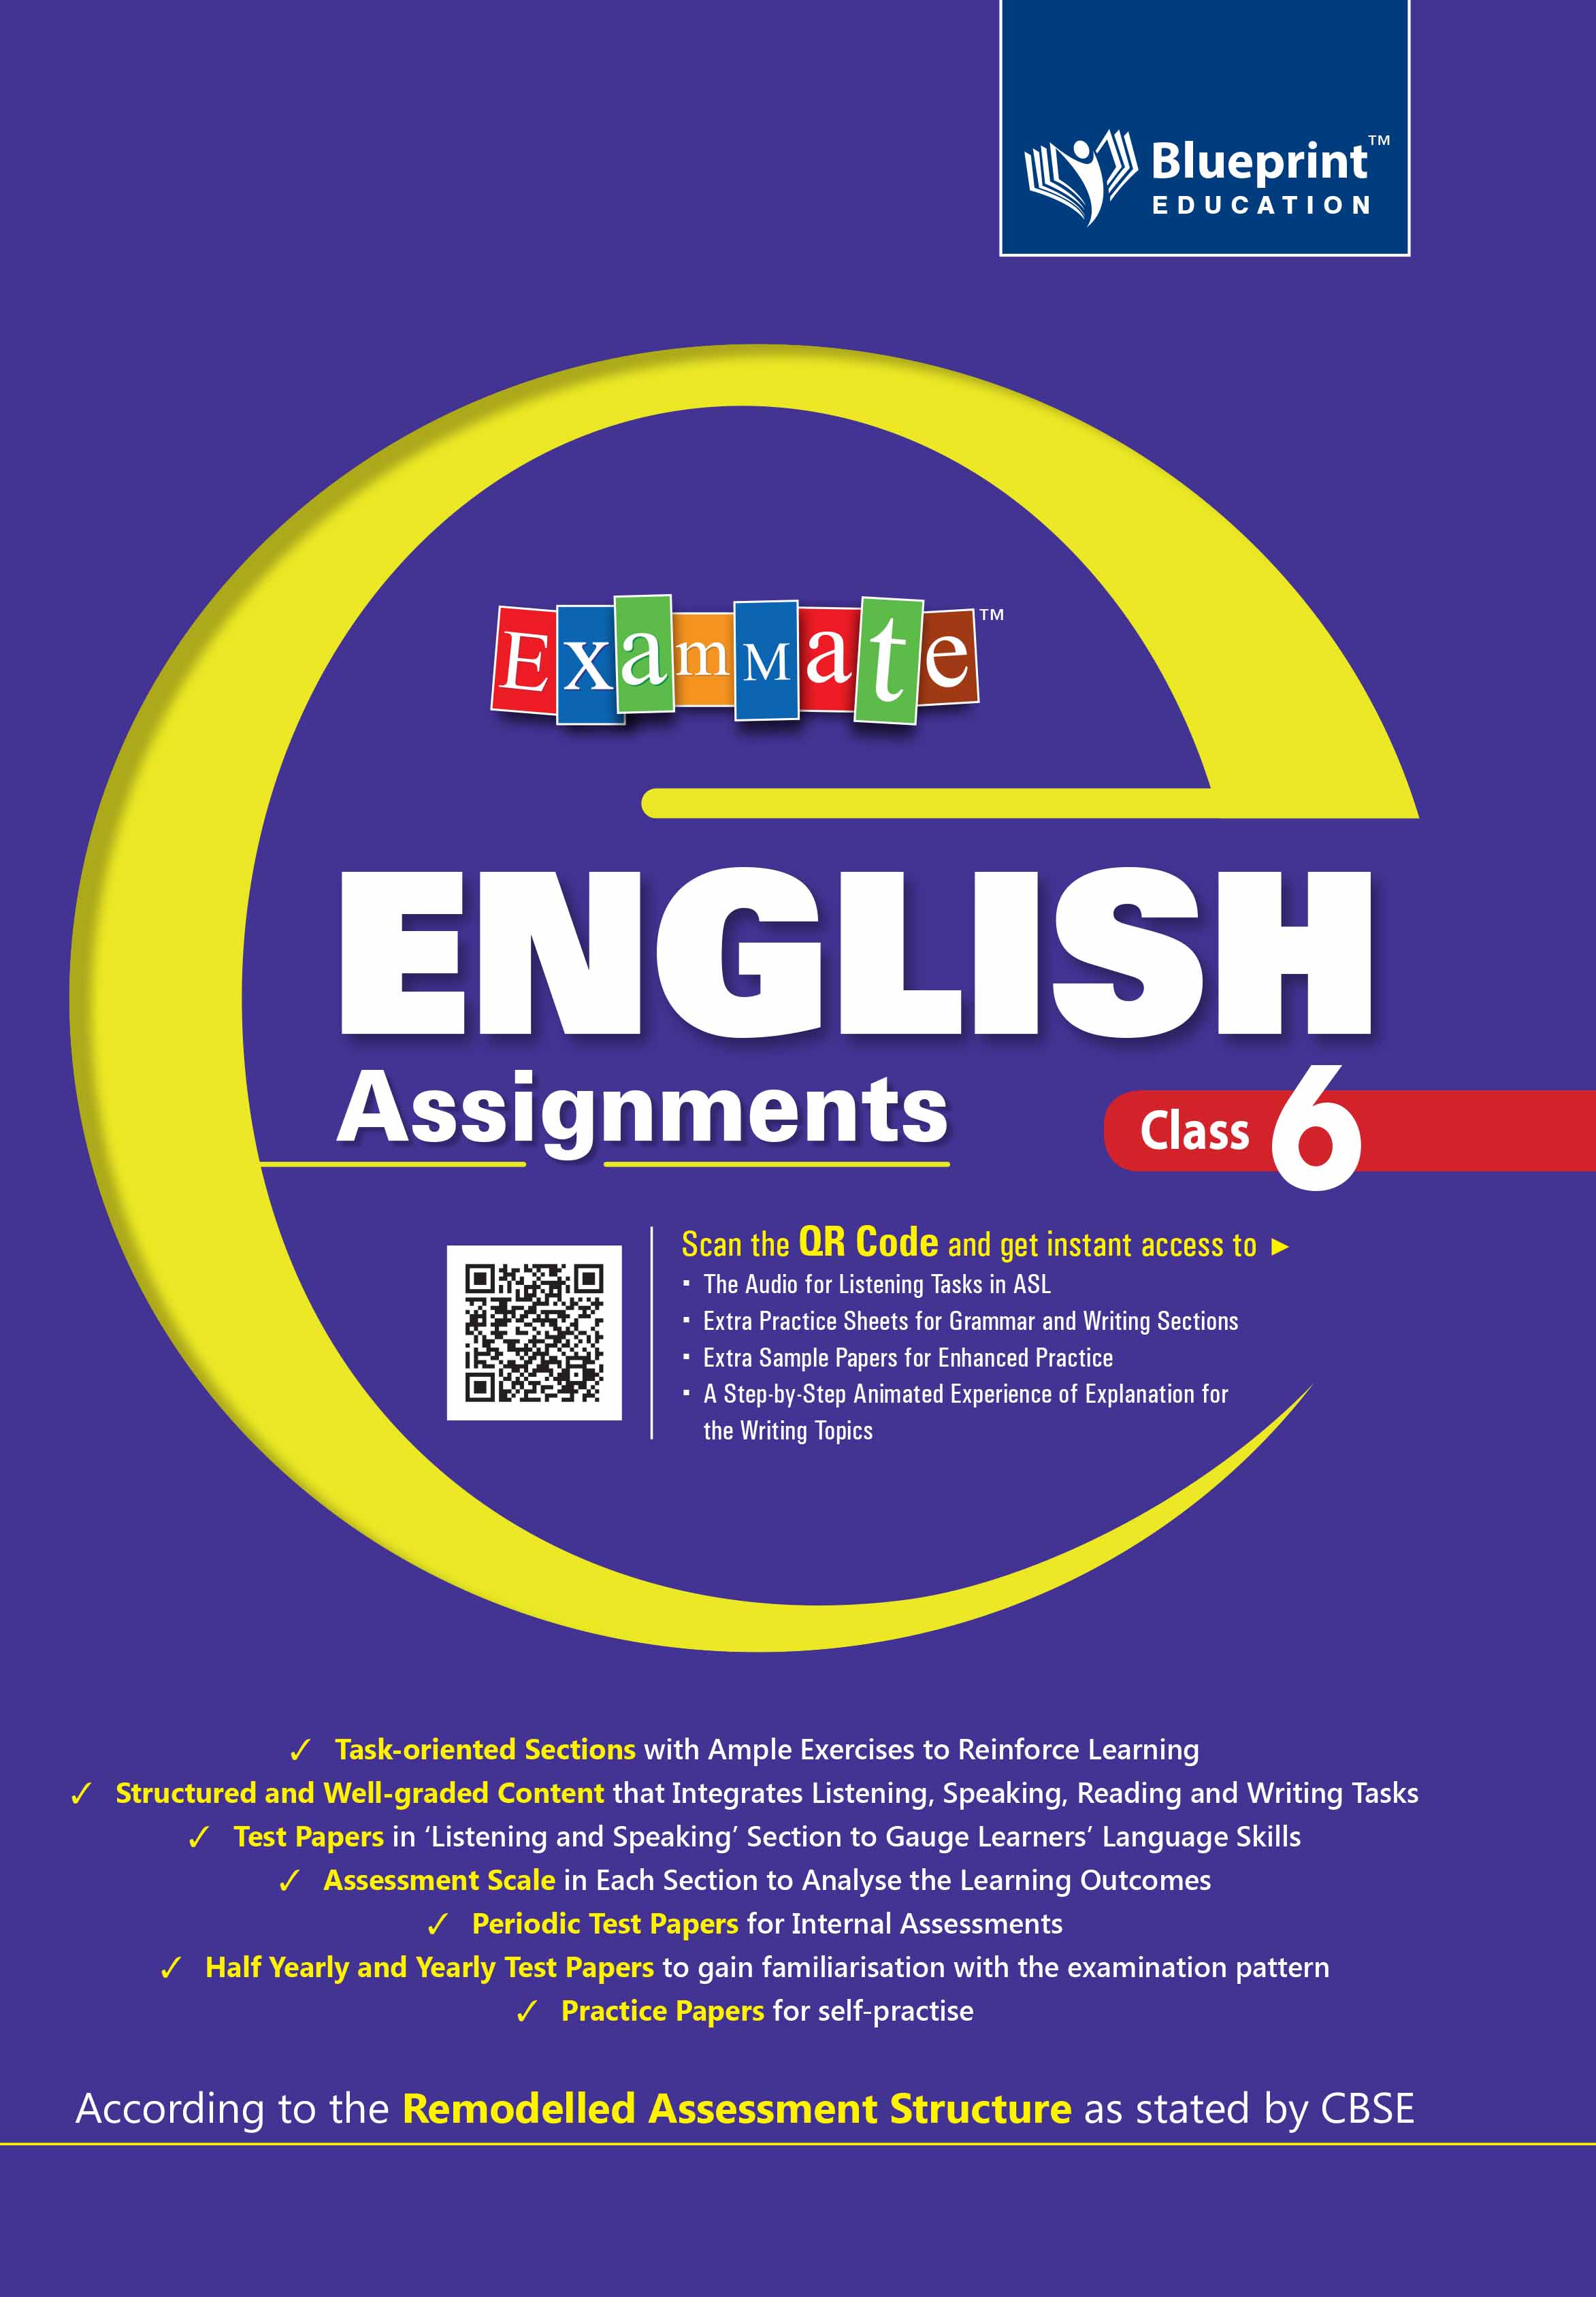 class 6 assignment english